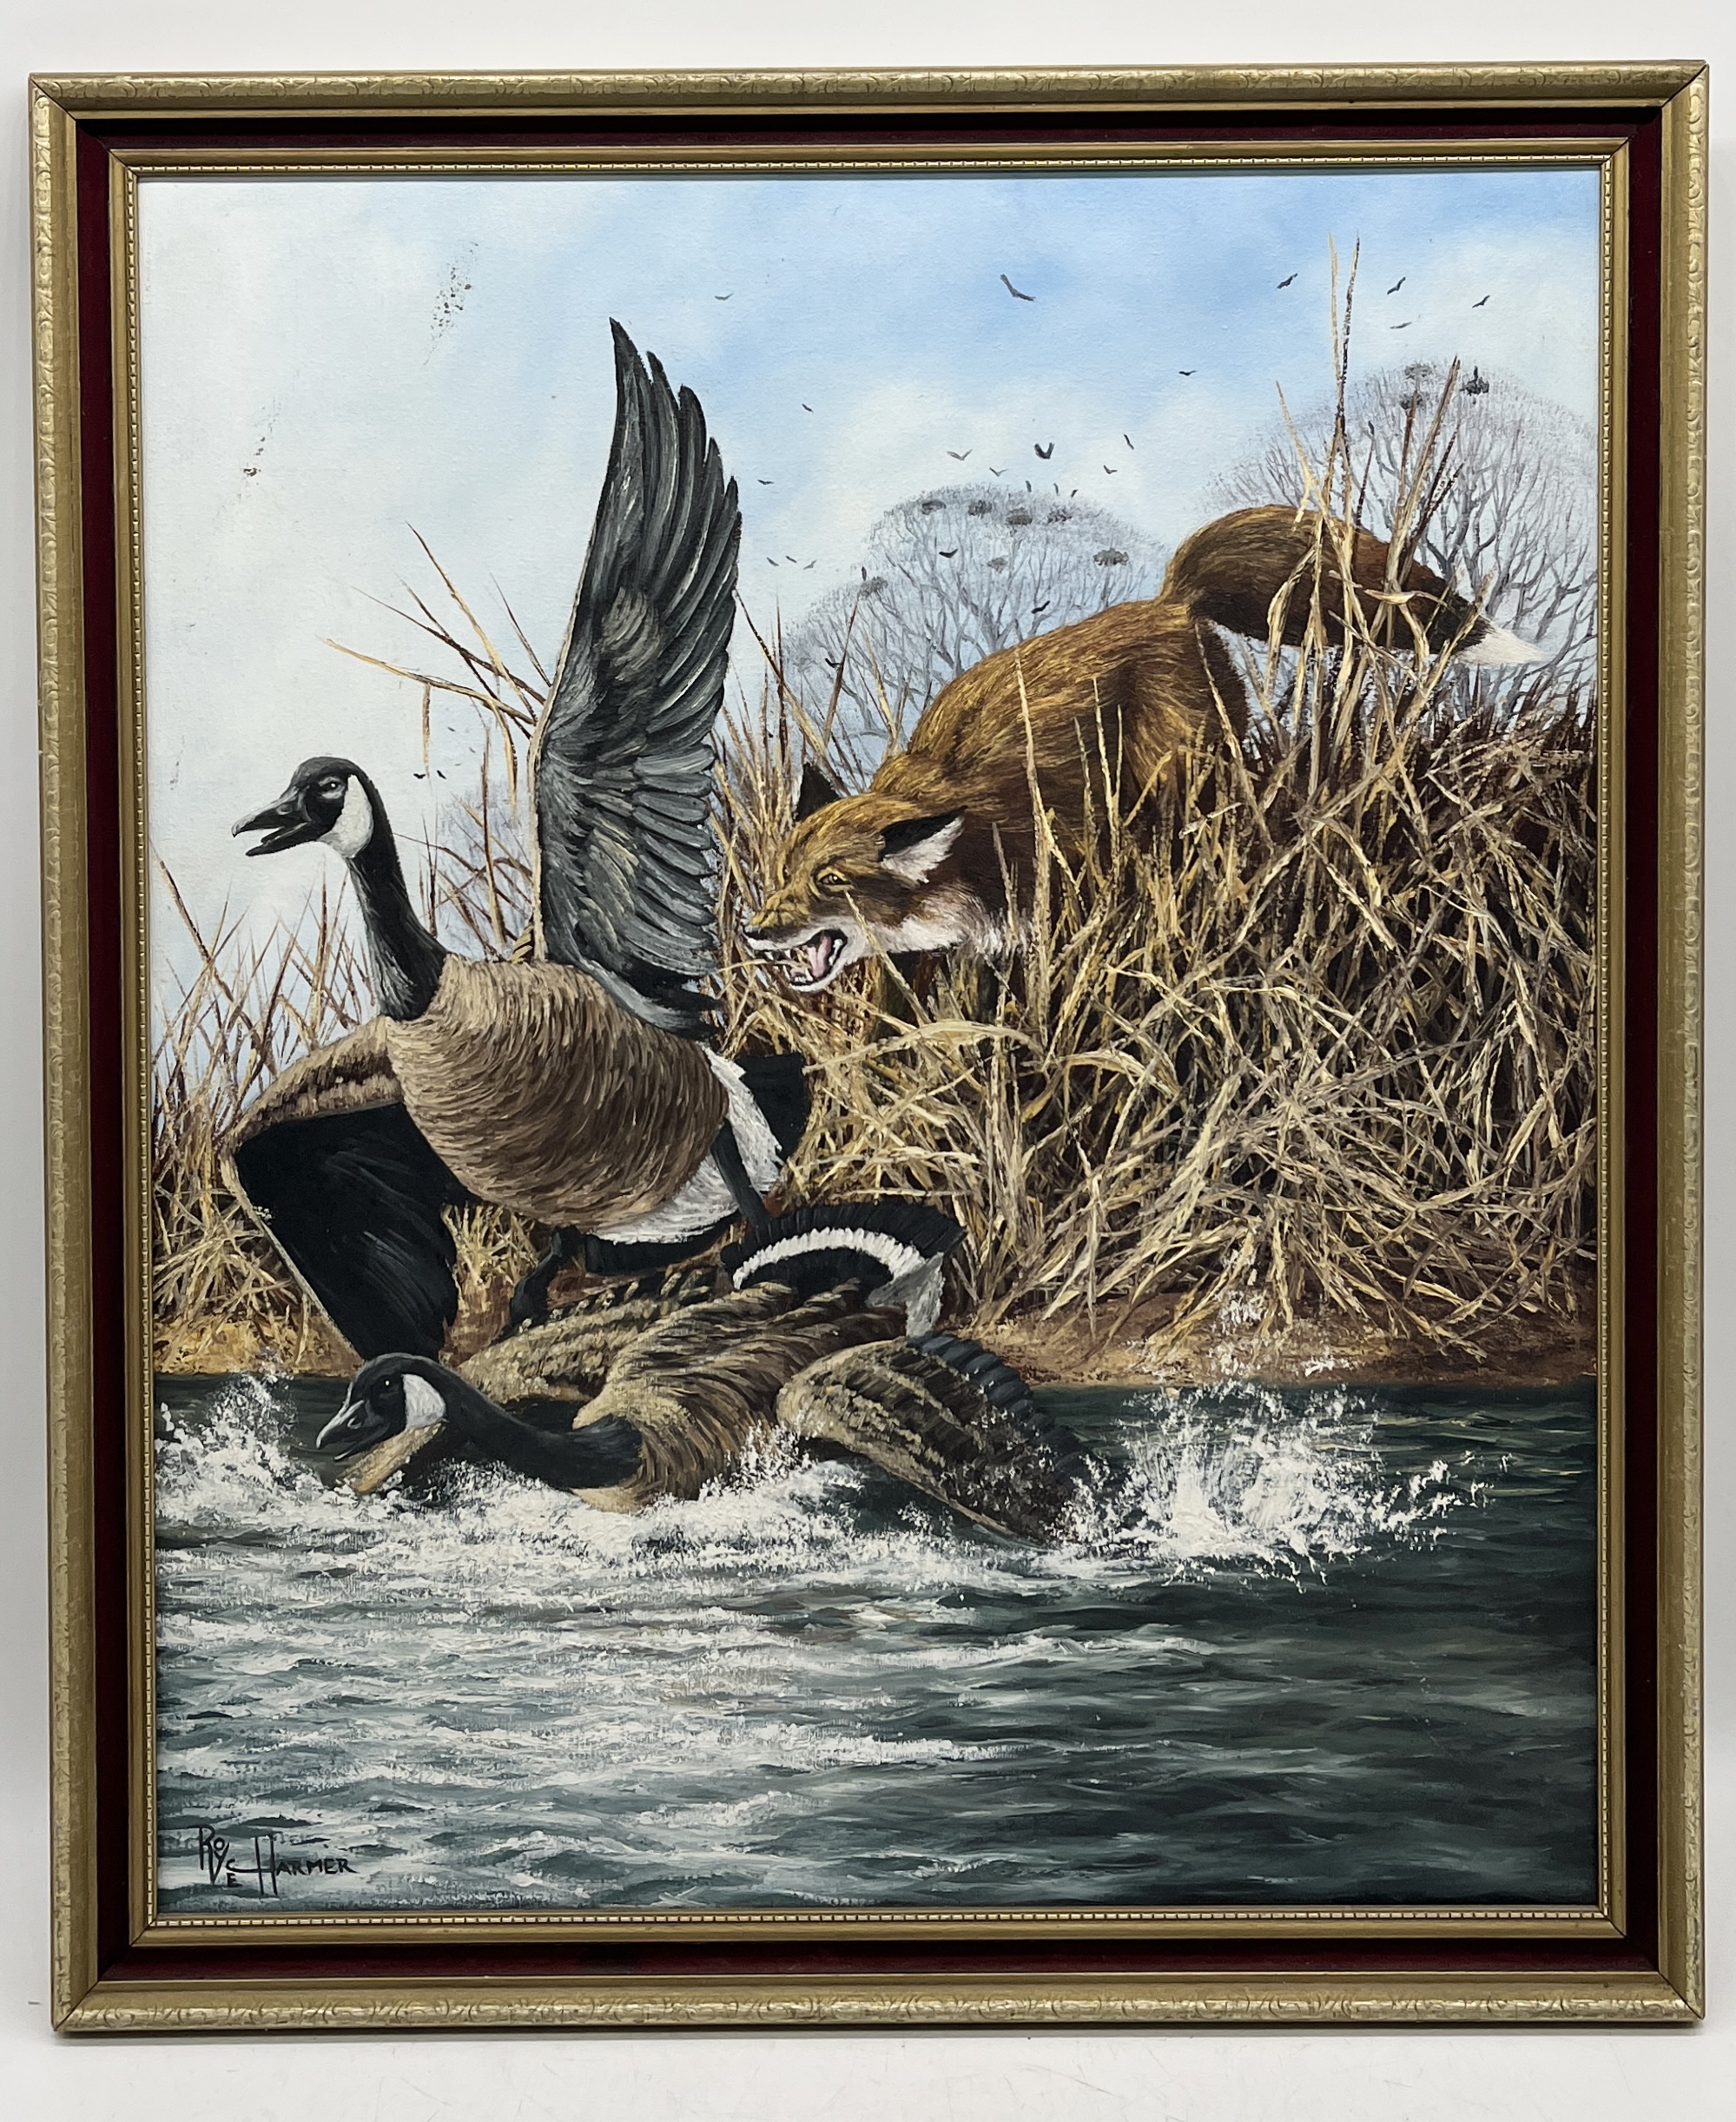 Royce Harmer (British 20th century) oil on canvas of a fox hunting geese - 68cm x 57cm